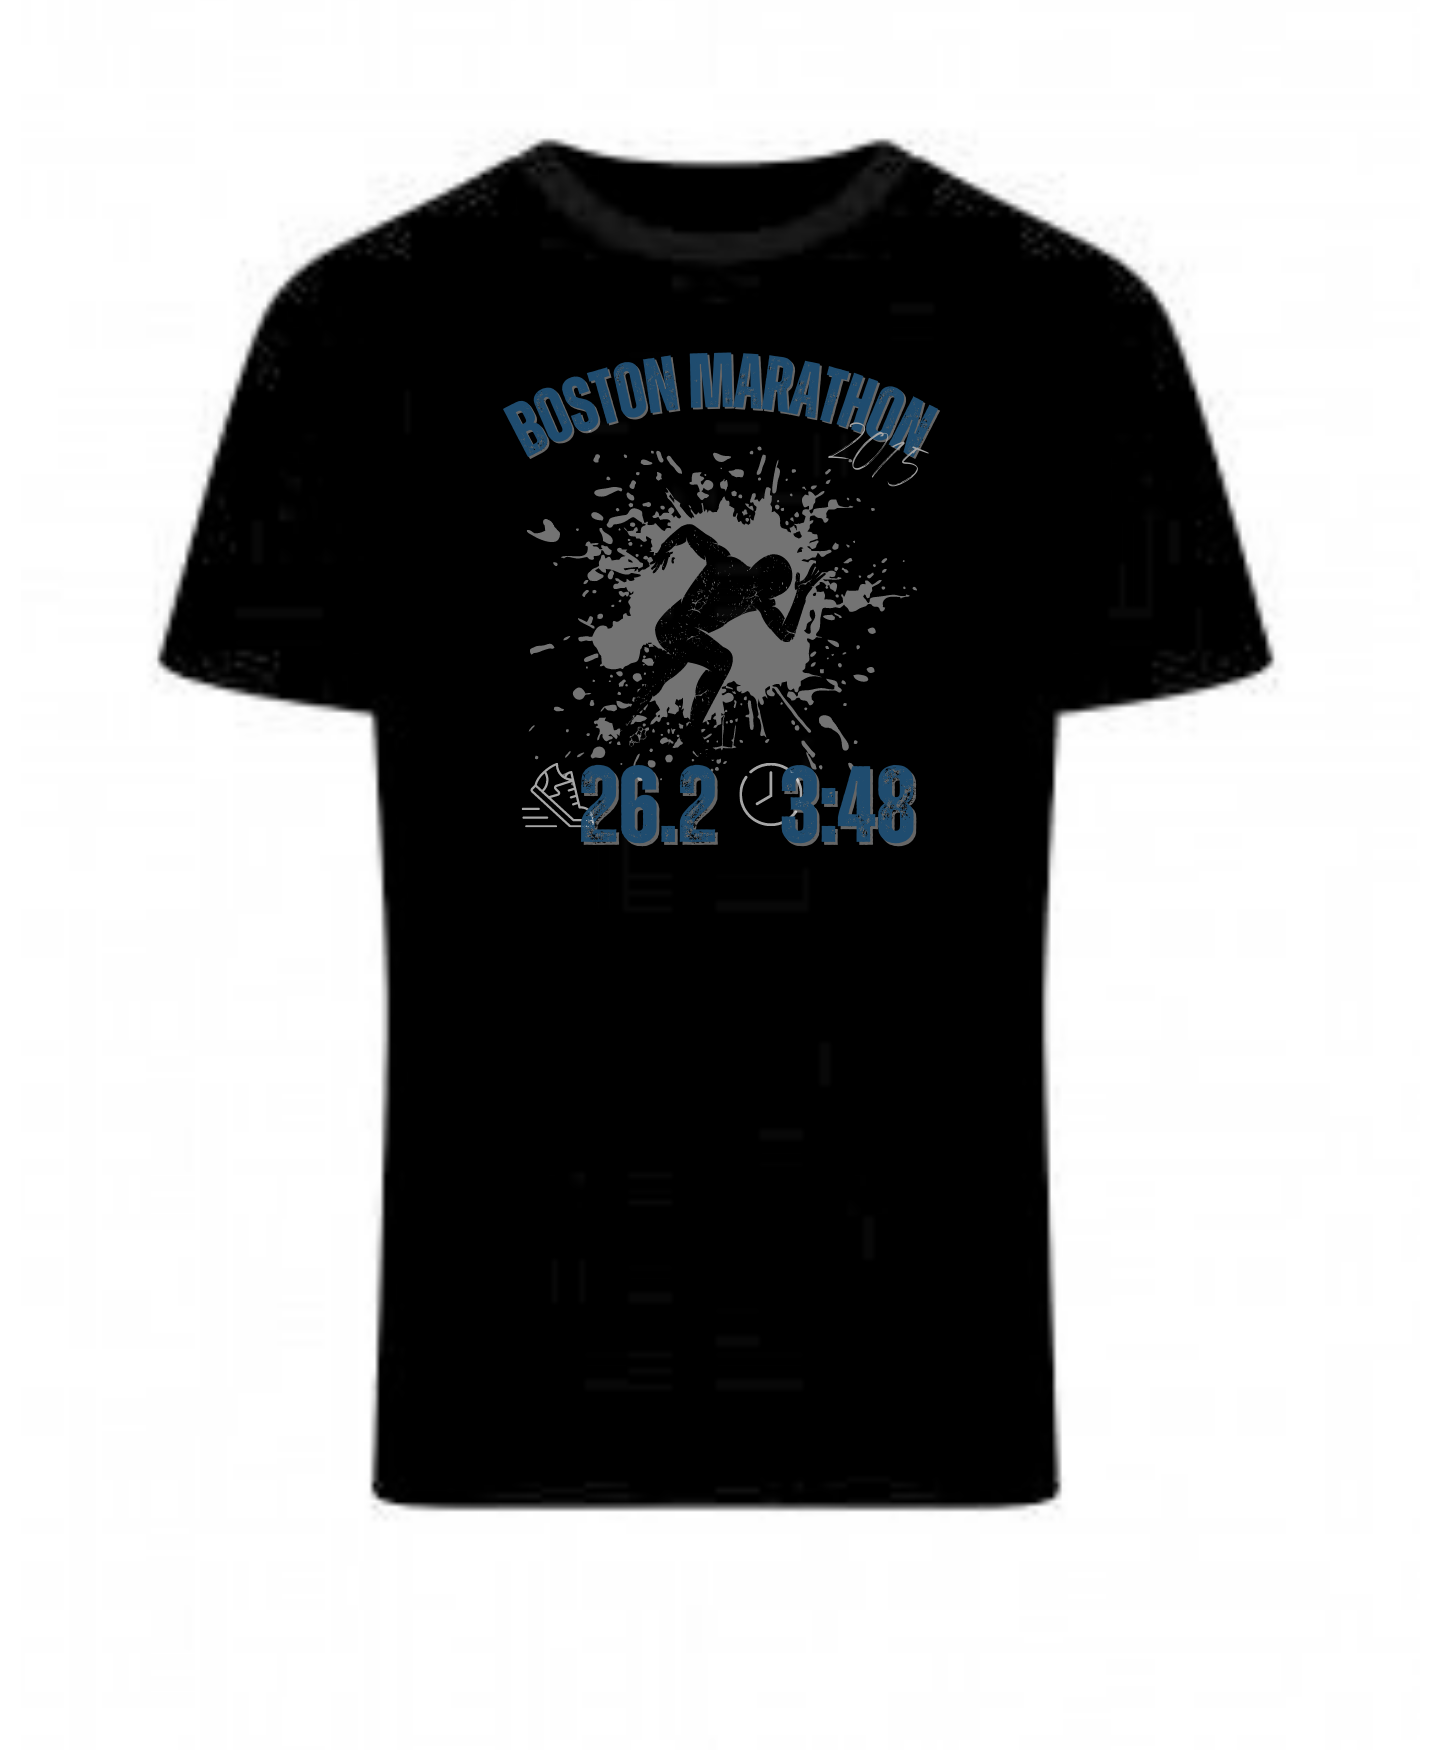 Custom Marathon Runner Completion Time T-Shirt